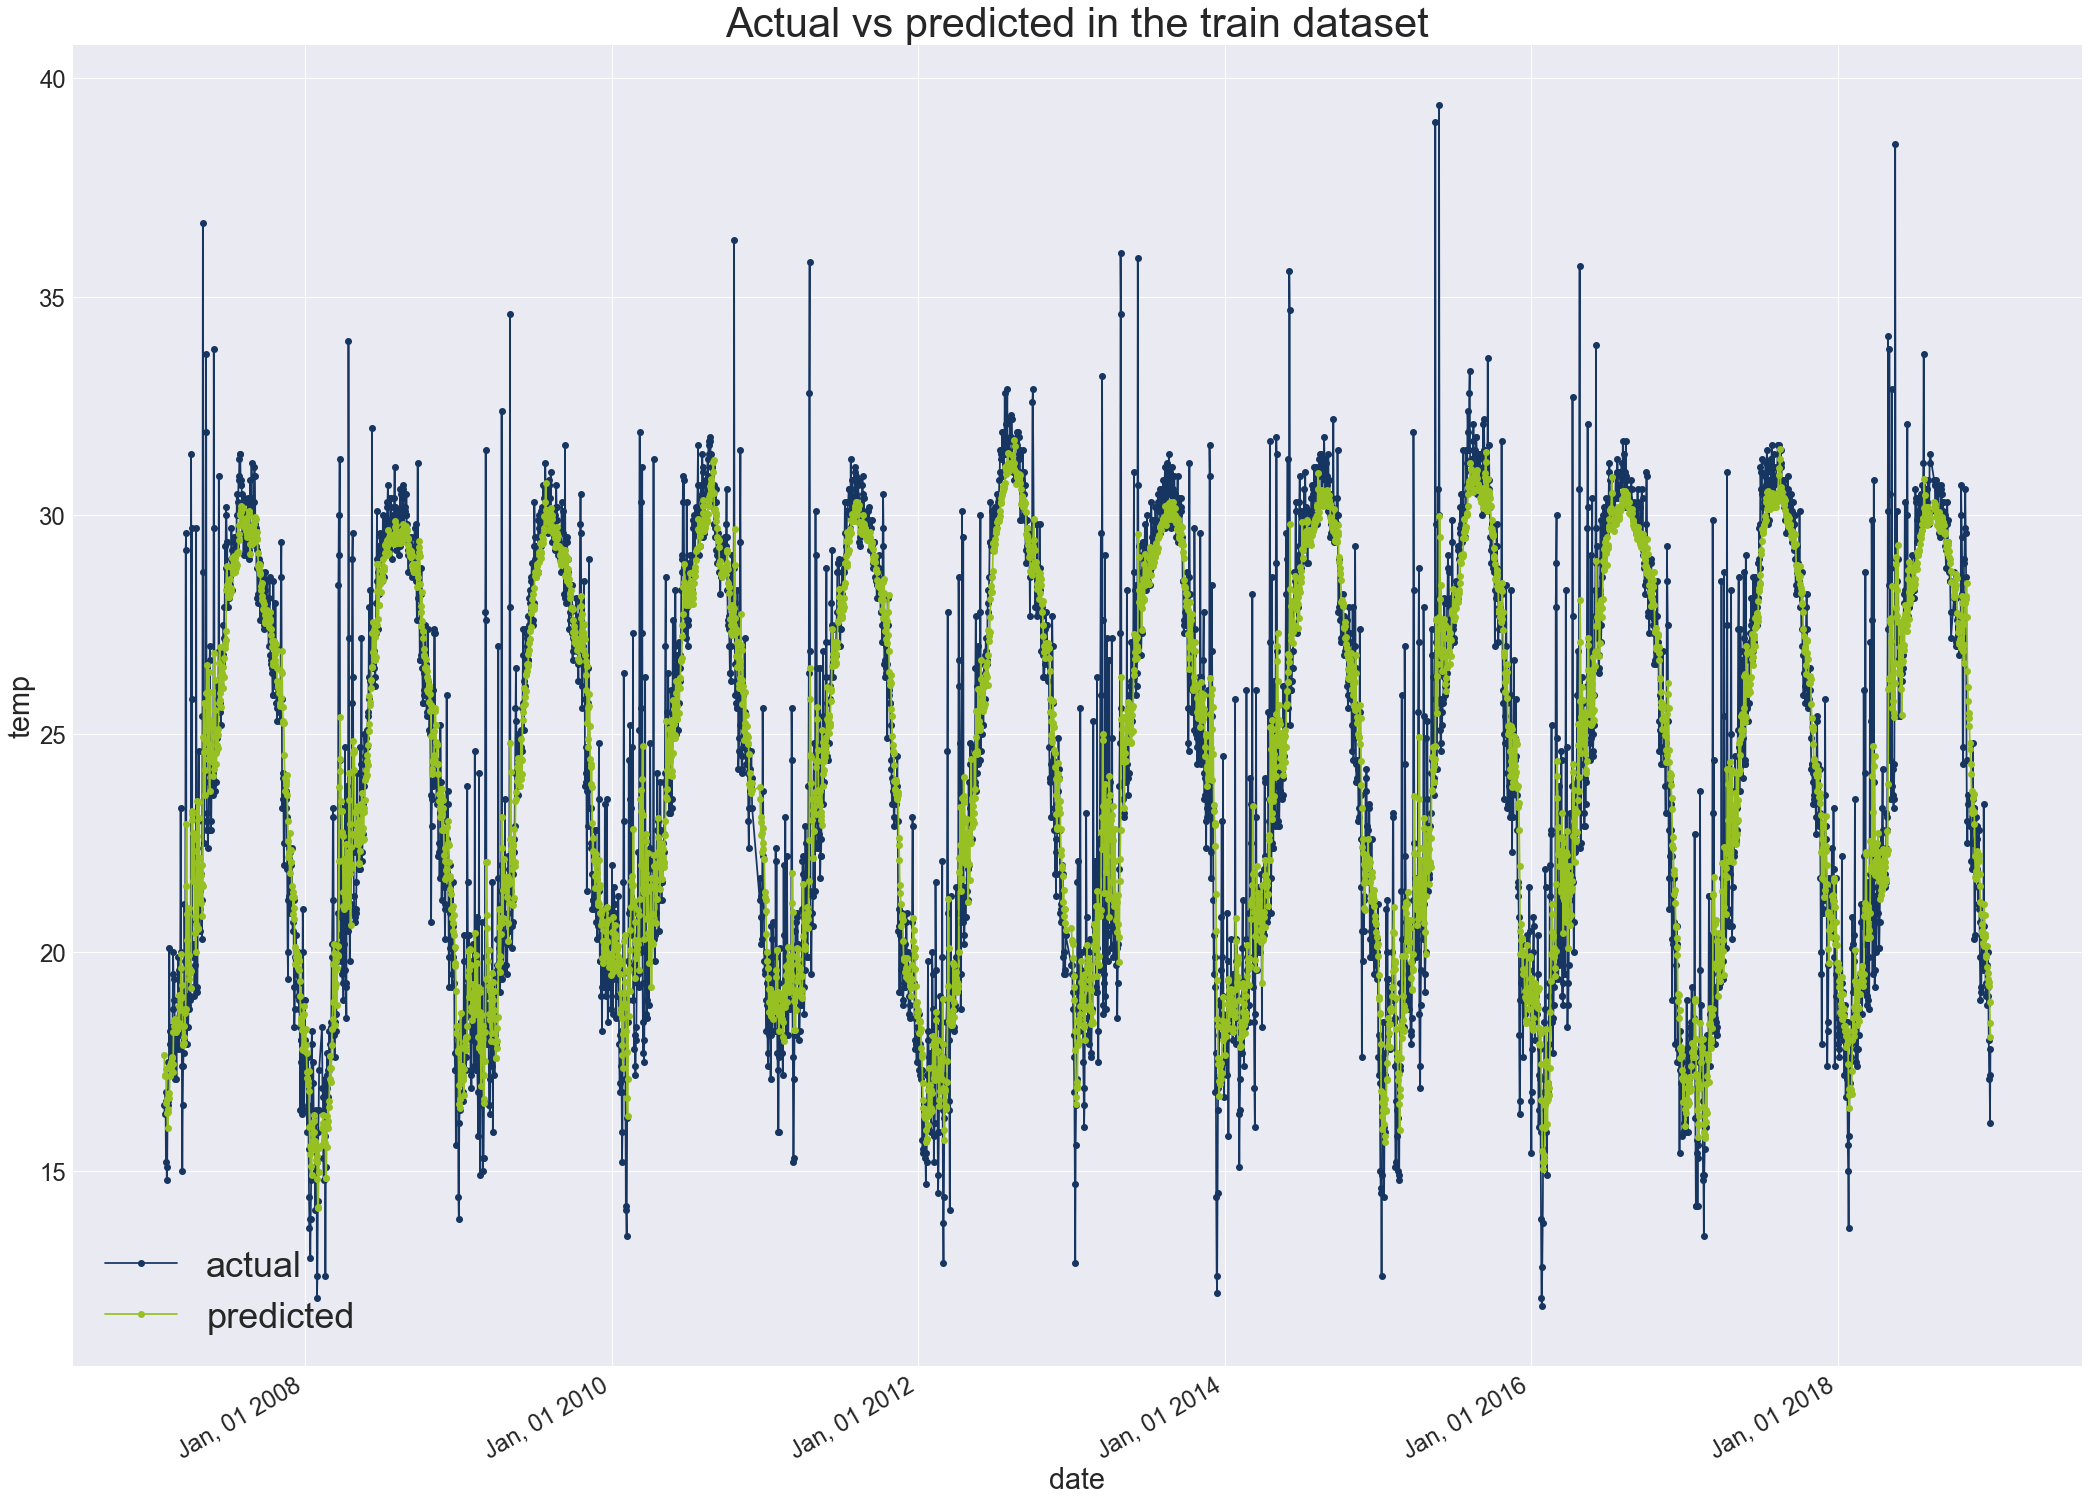 actual temperatures vs model predictions in the train dataset